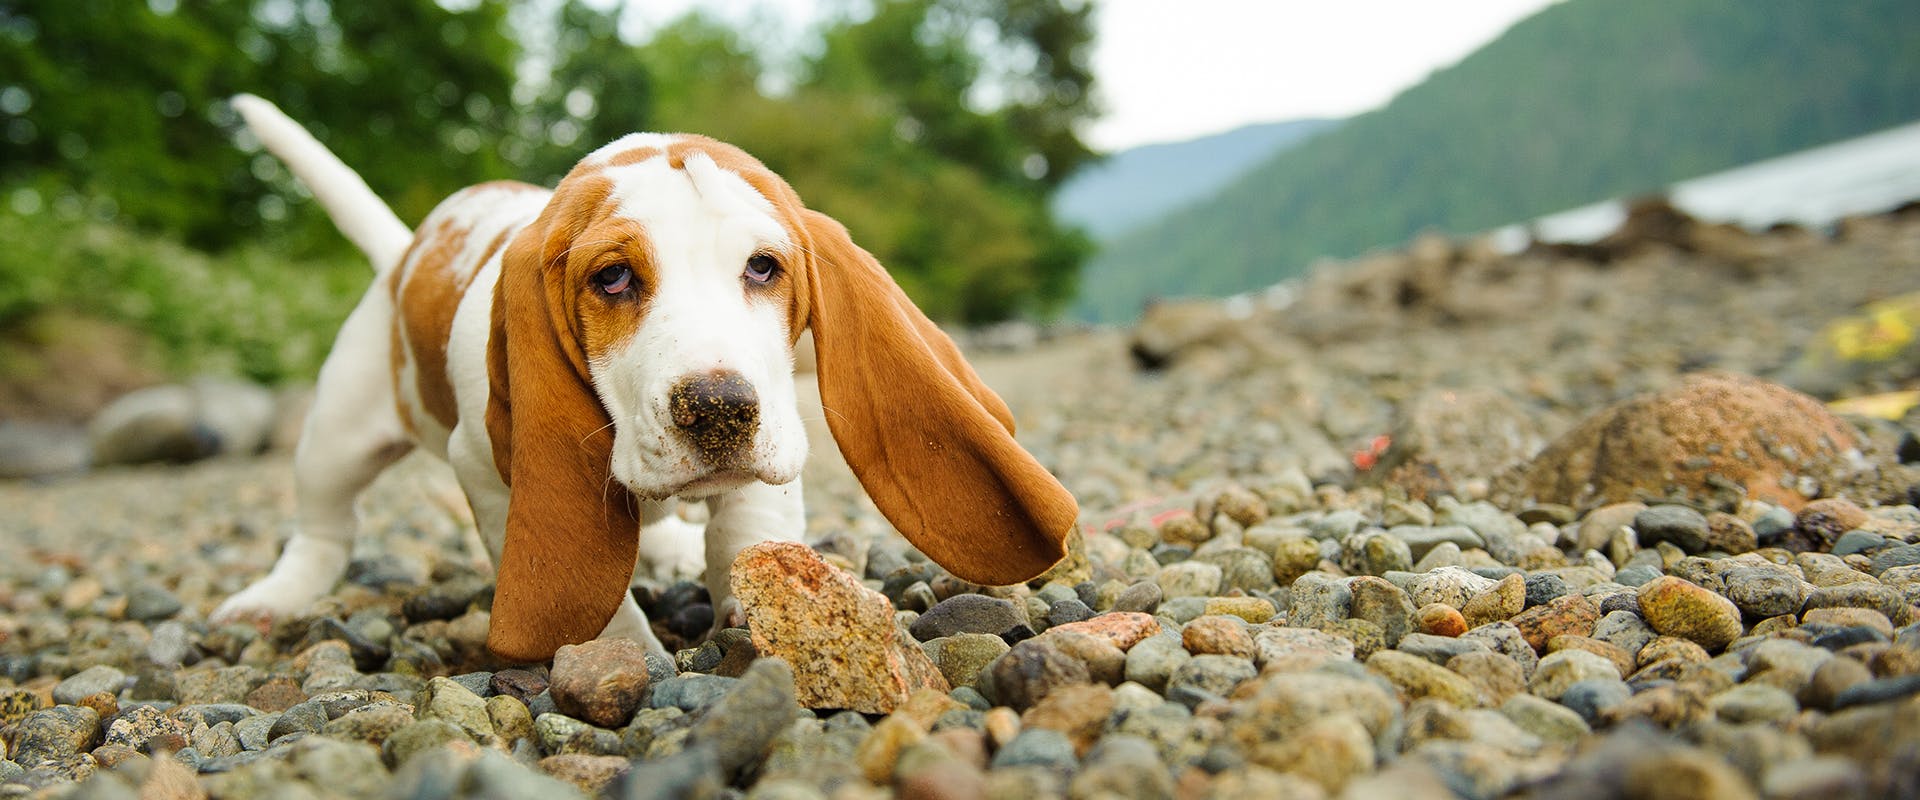 A cute Basset Hound puppy running on a stony path beside a lake